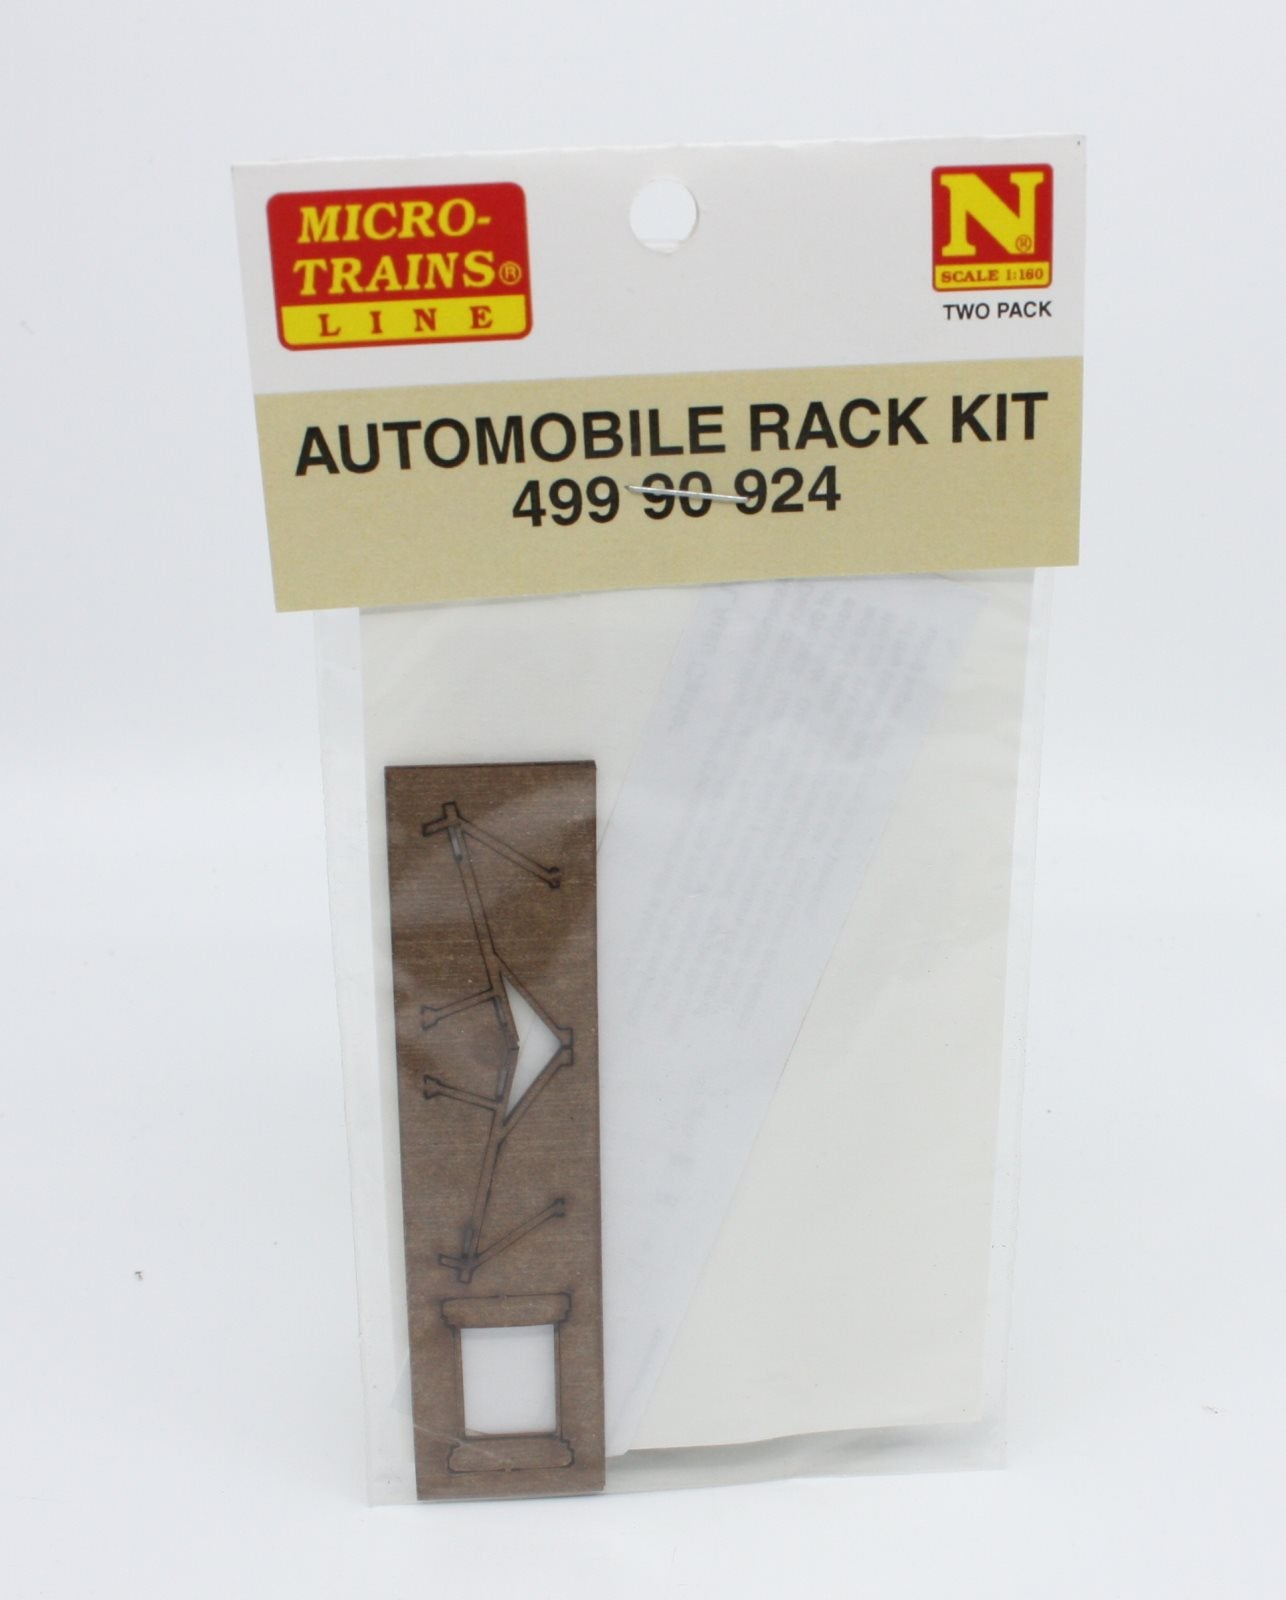 Micro-Trains 49990924 N Automobile Rack Kit